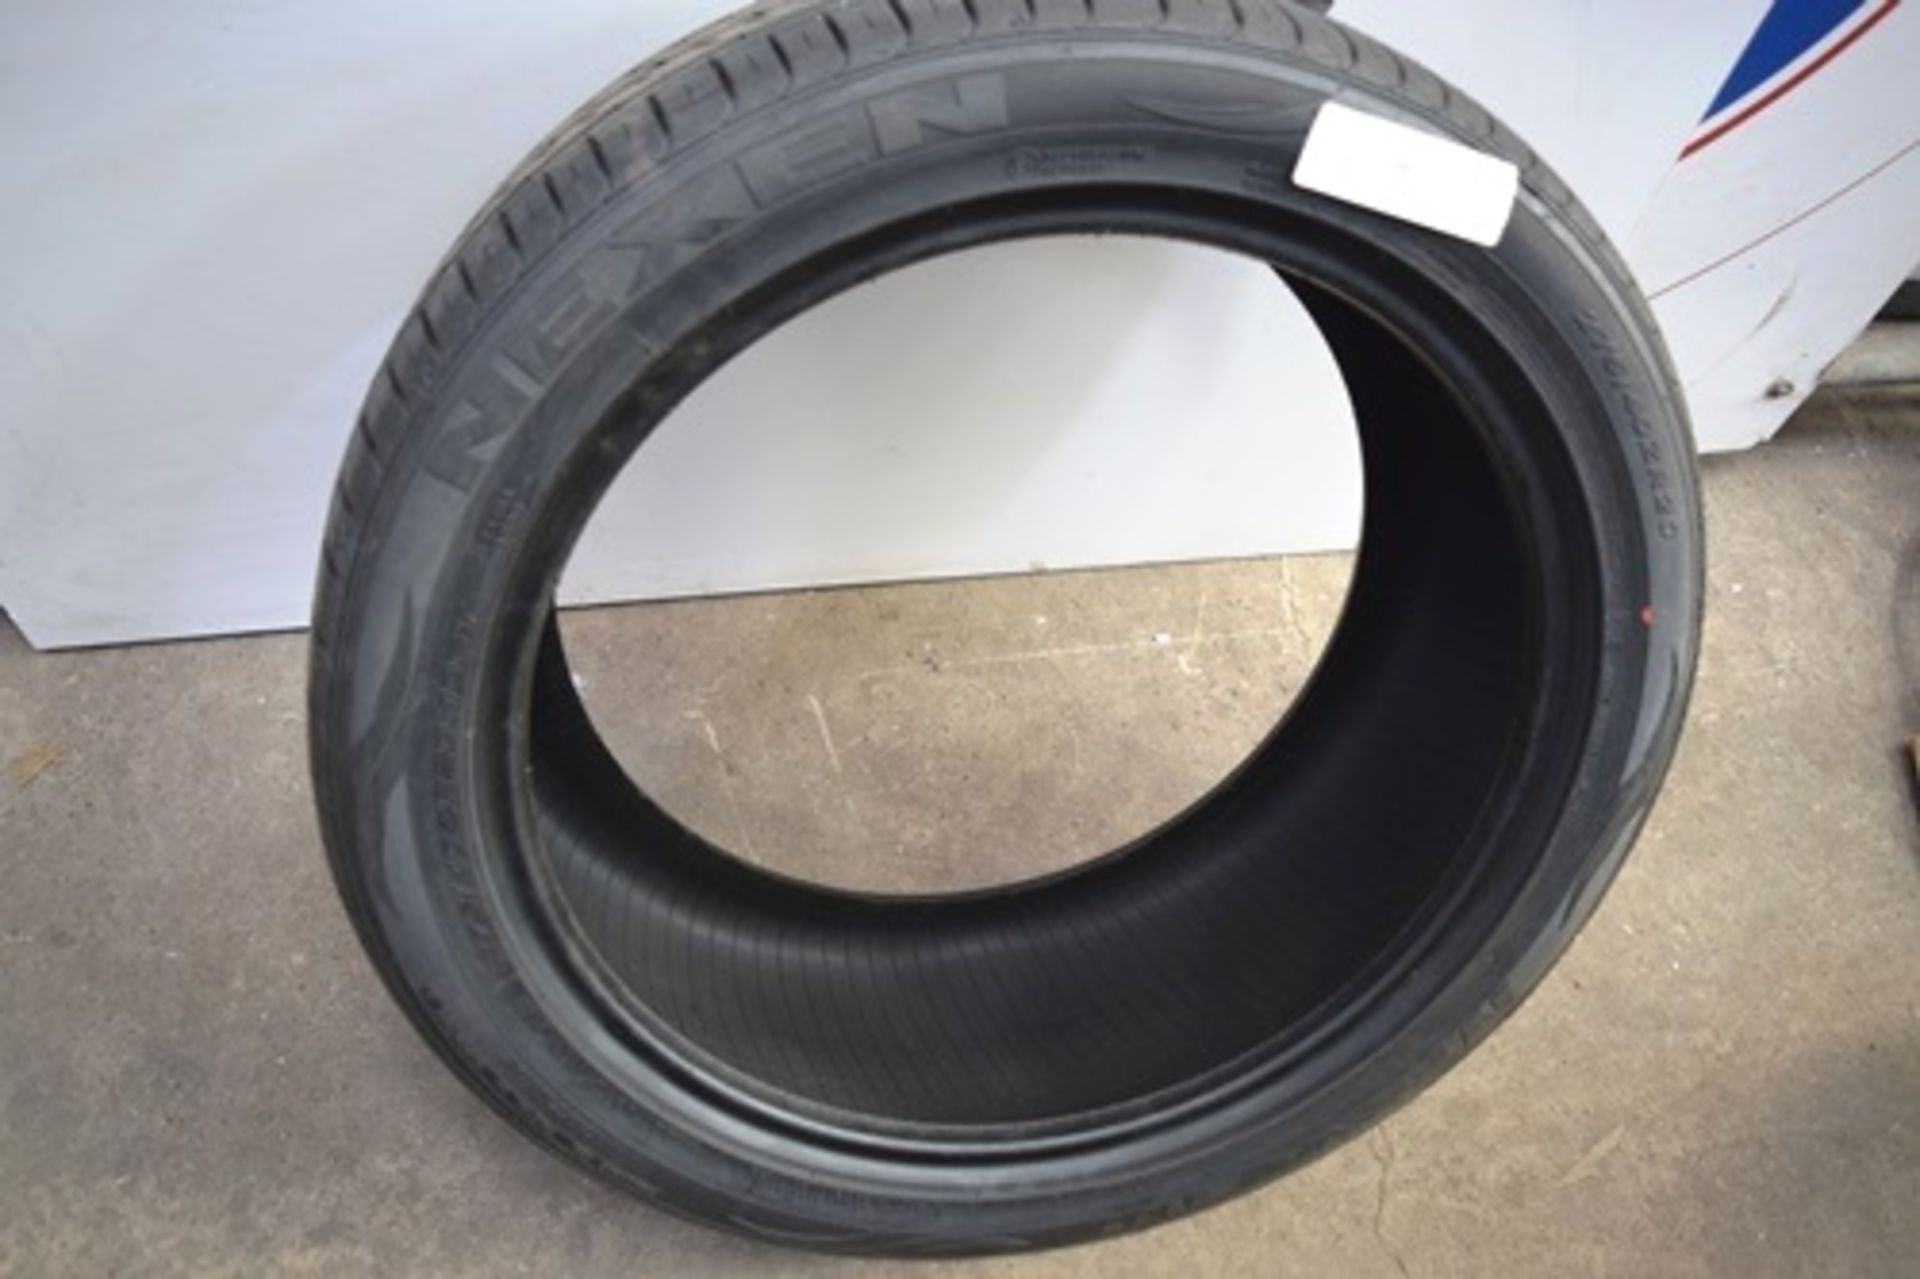 1 x Nexen N Fera SU1 tyre, size 275/40ZR20 106Y XL - New with label (GS1) - Image 2 of 2